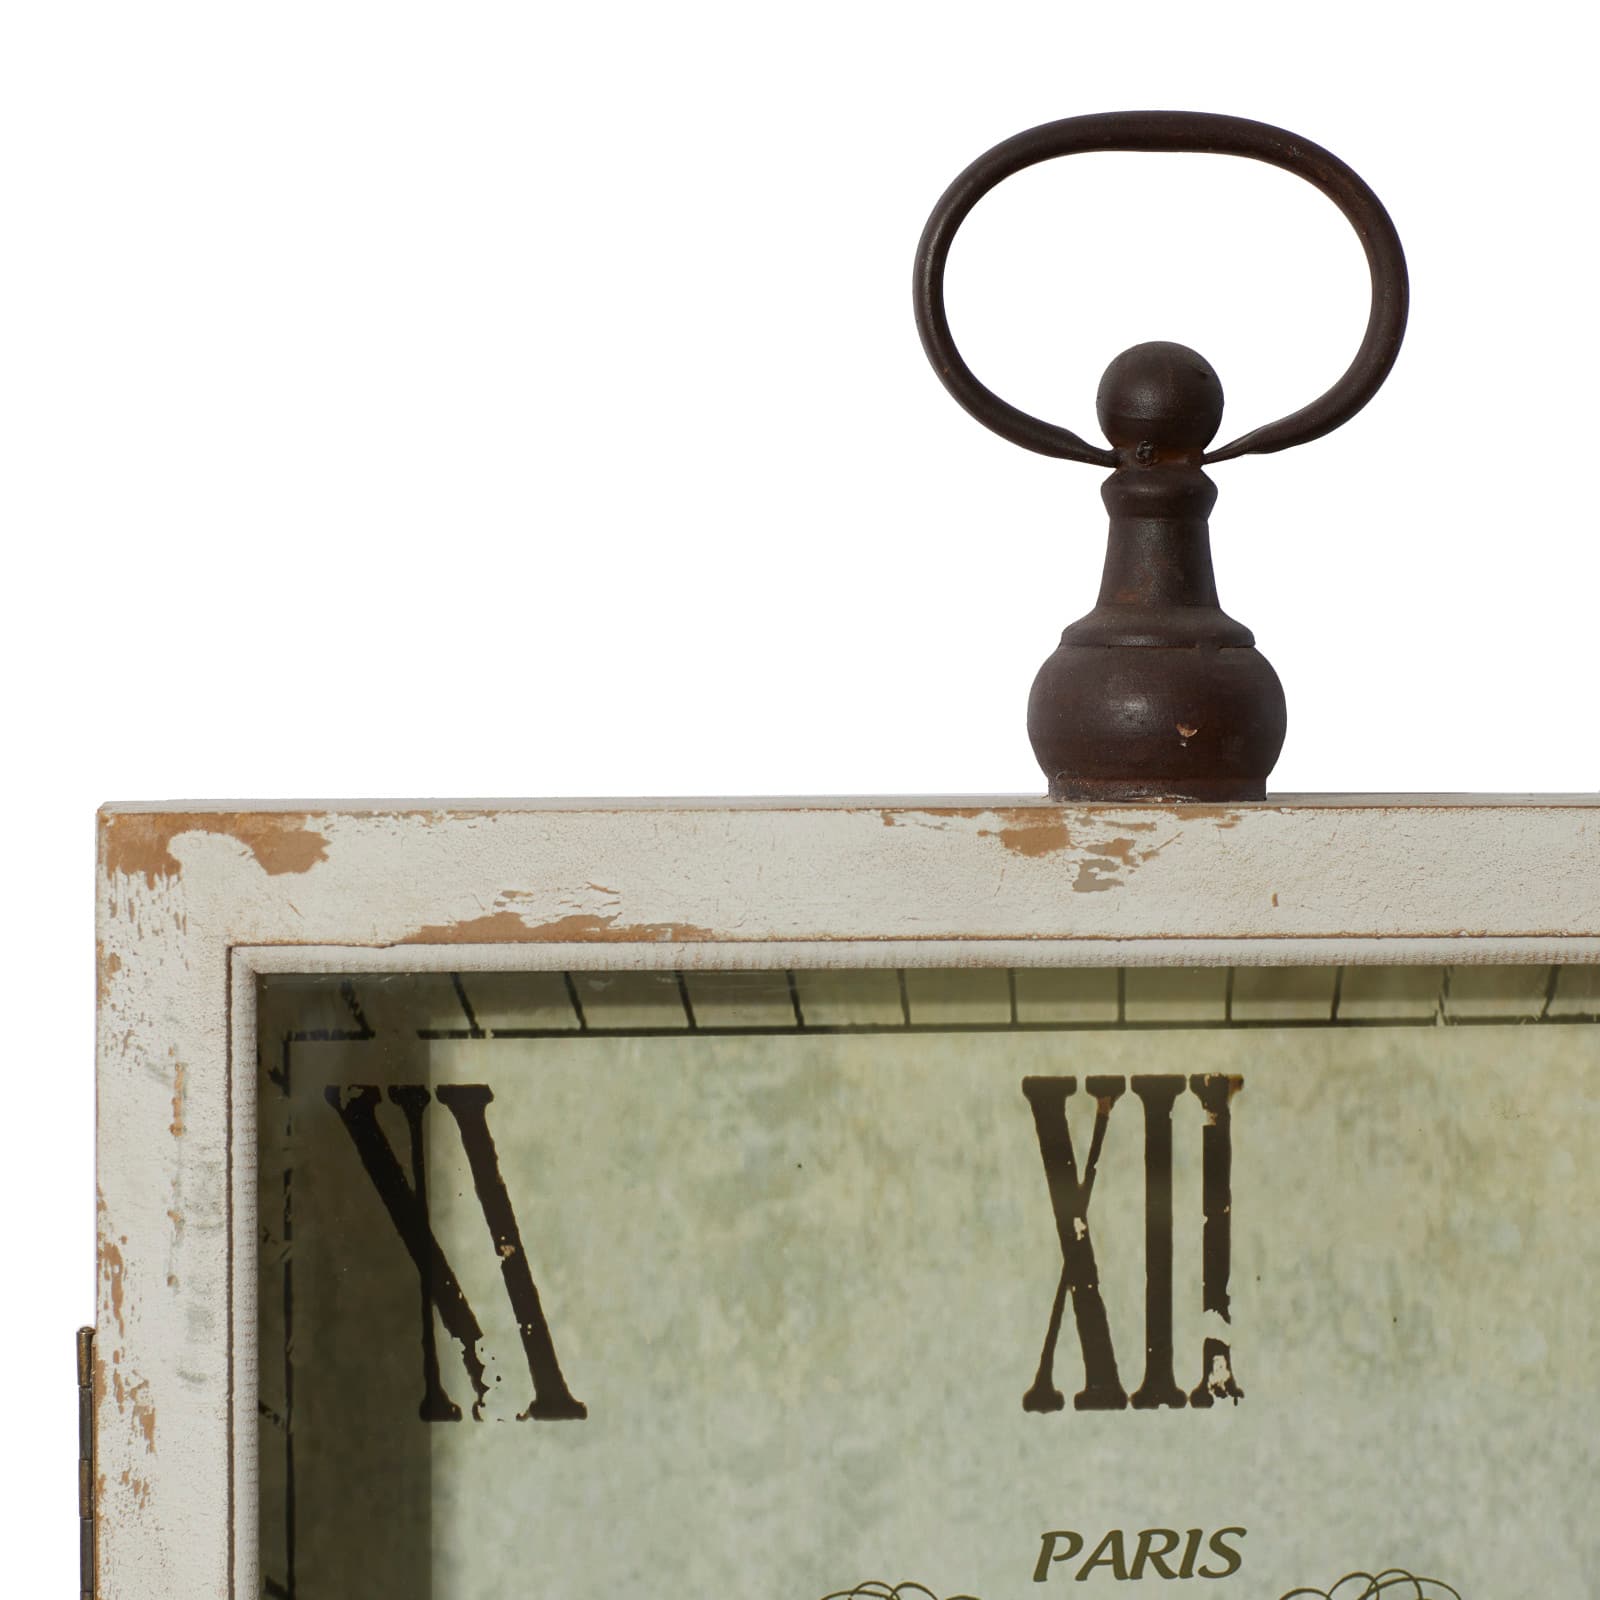 34&#x22; White Vintage Wood Wall Clock